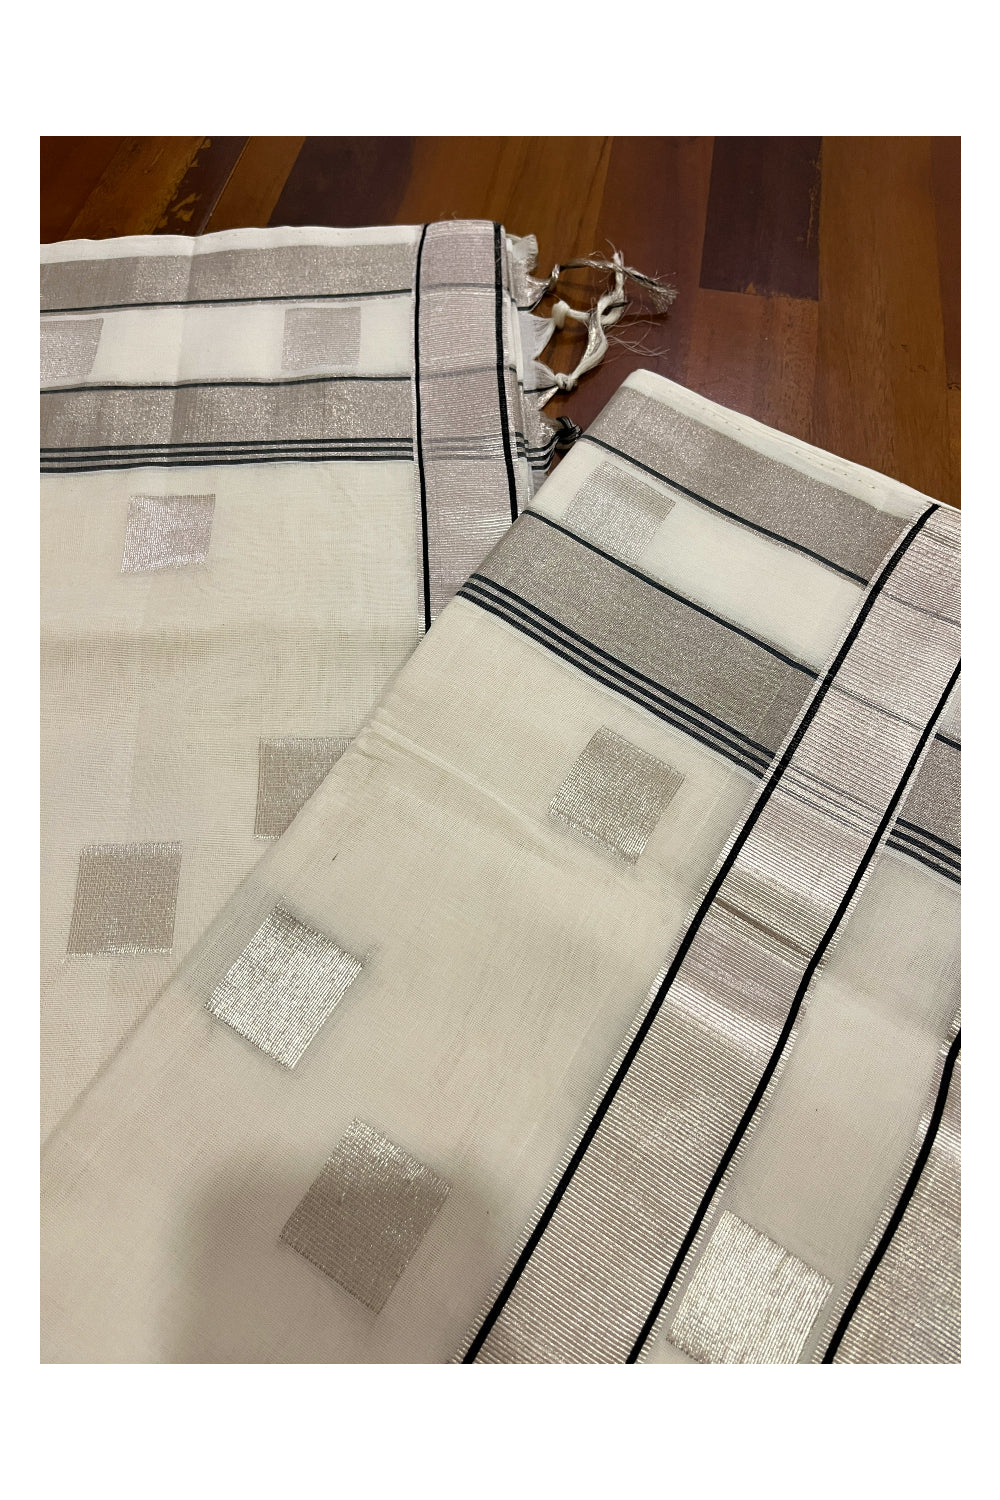 Southloom Premium Handloom Cotton Saree with Silver Kasavu Woven Works on Body